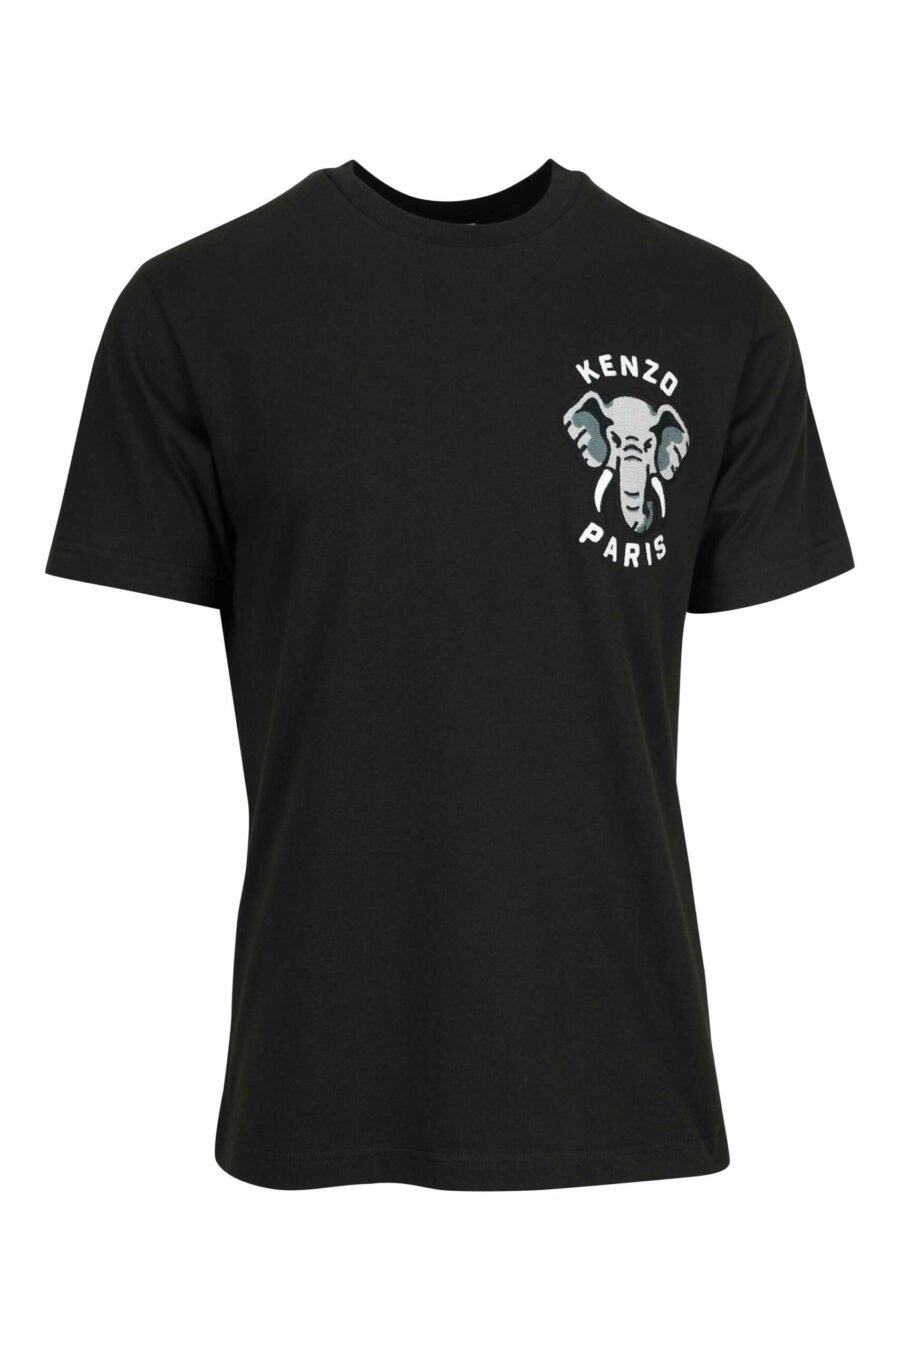 T-shirt noir avec mini logo "kenzo elephant" - 3612230625365 scaled